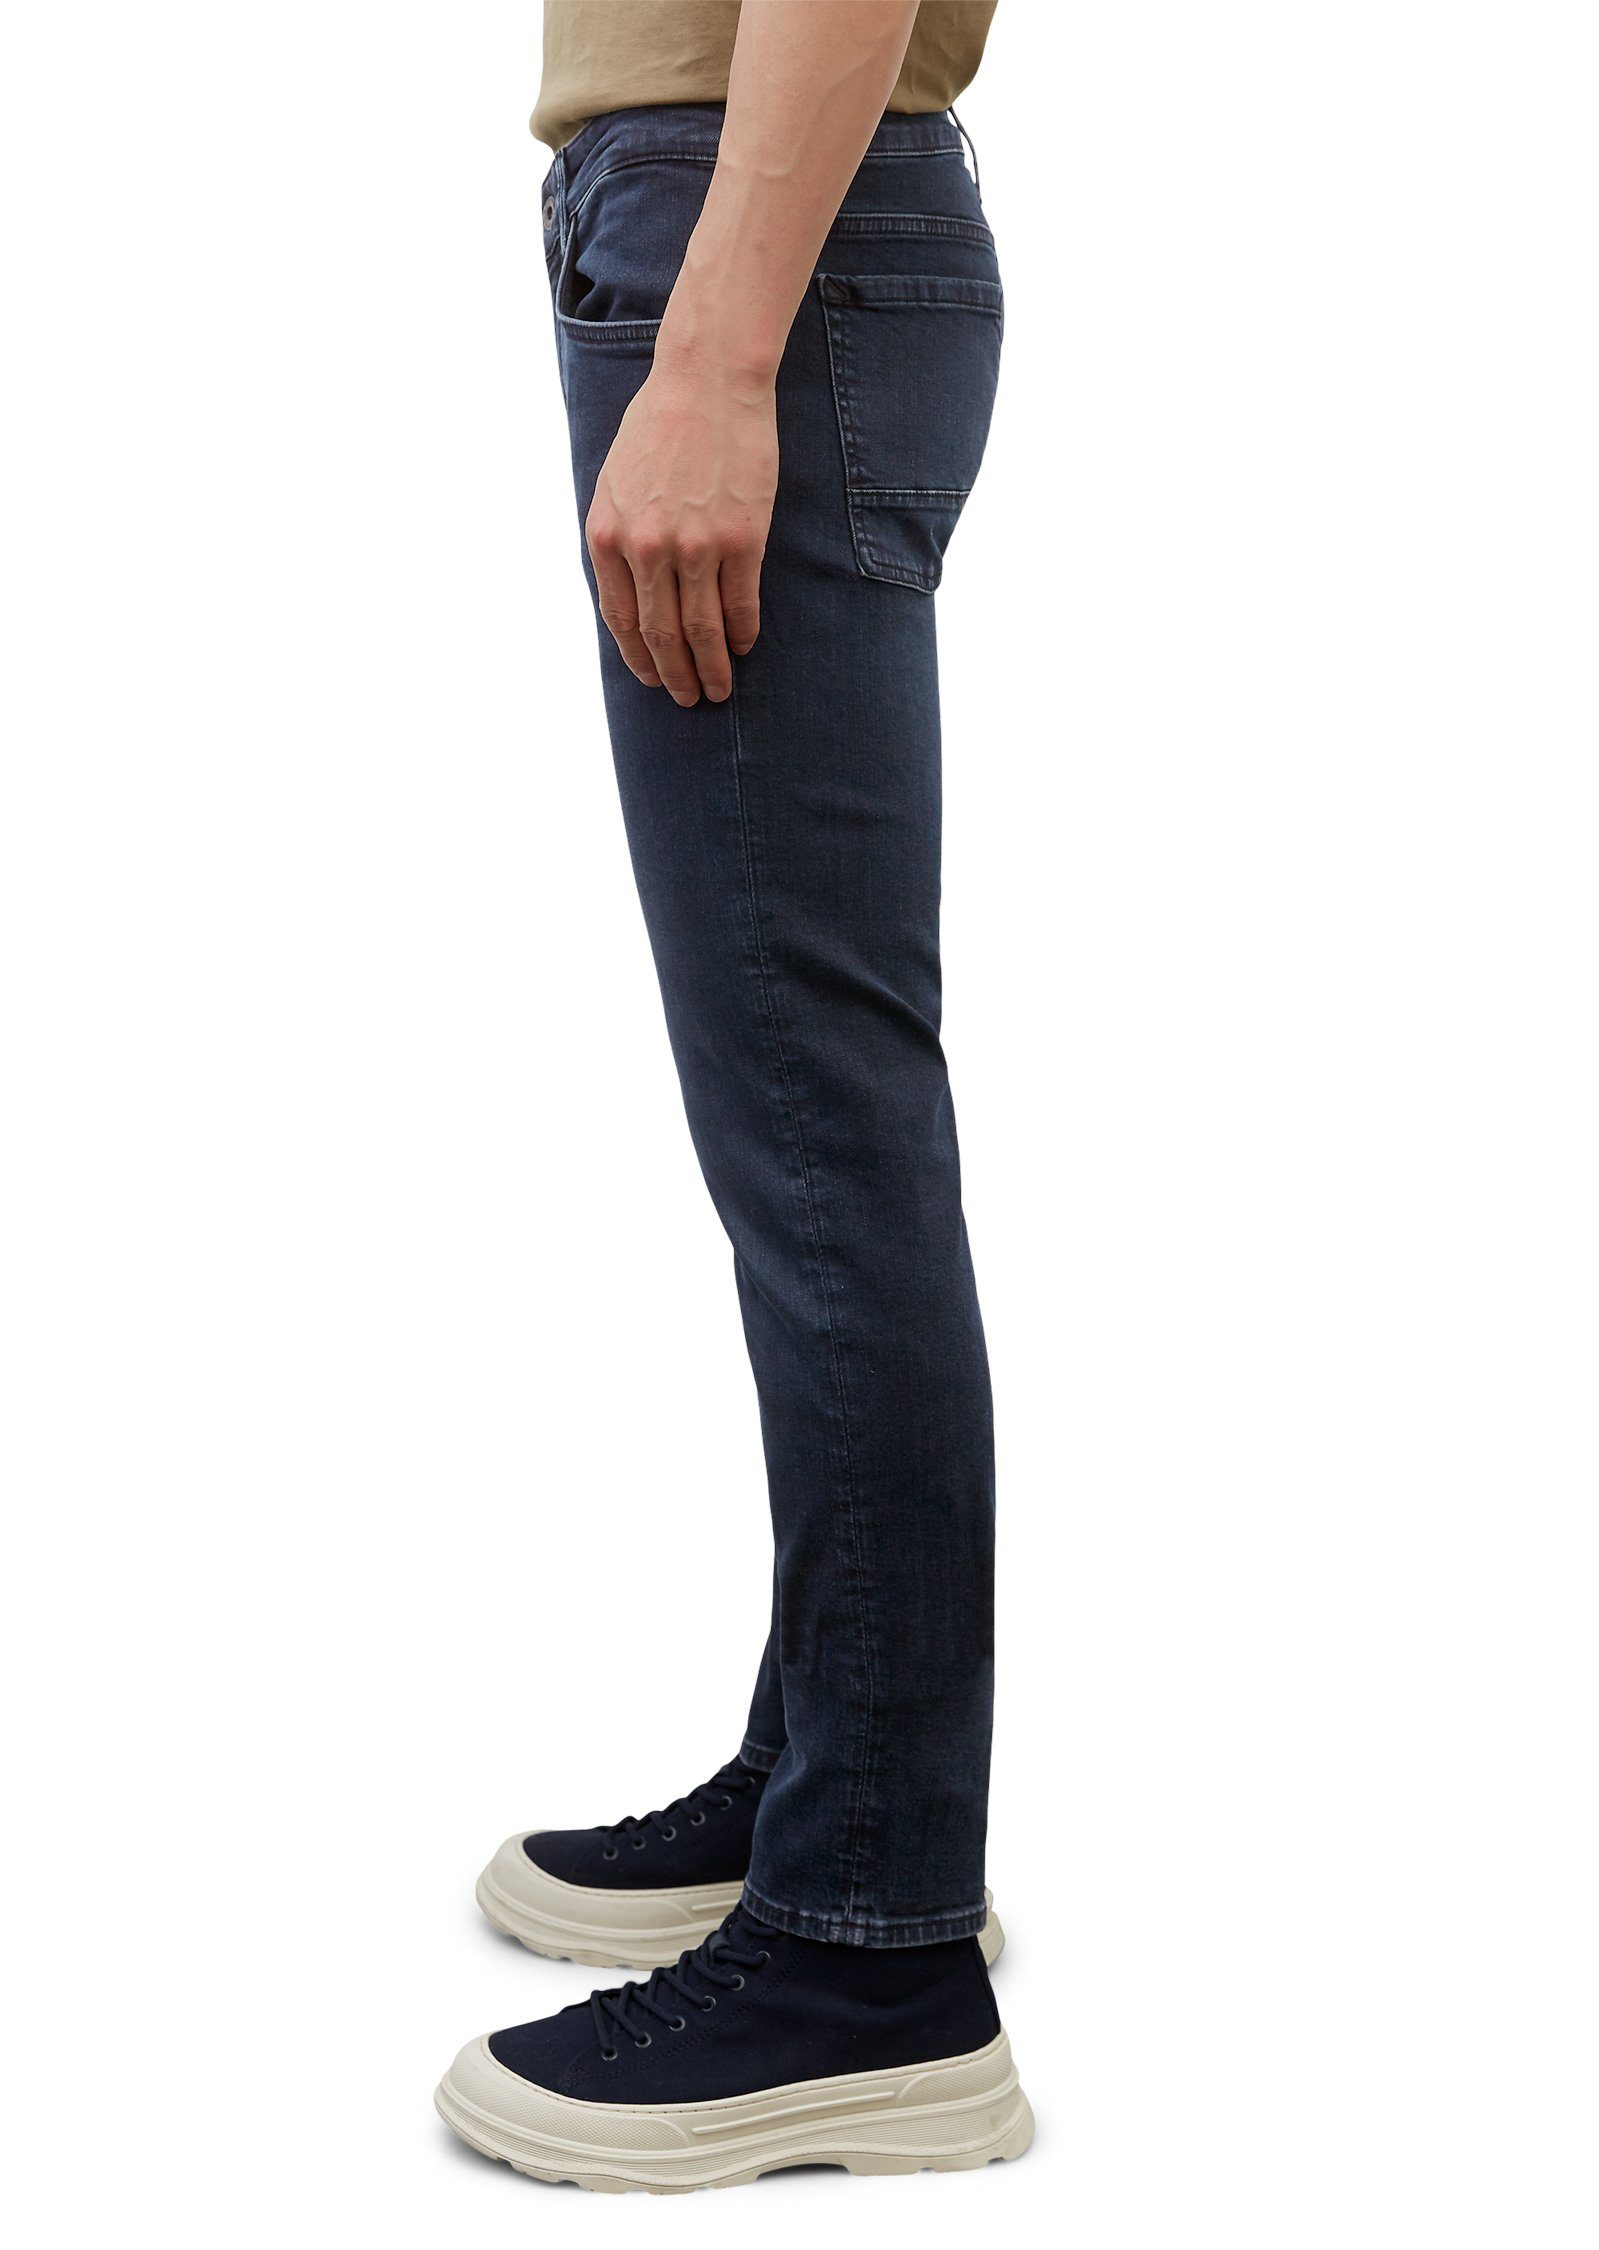 Herren Jeans Marc O'Polo Slim-fit-Jeans aus hochwertigem Baumwoll-Mix